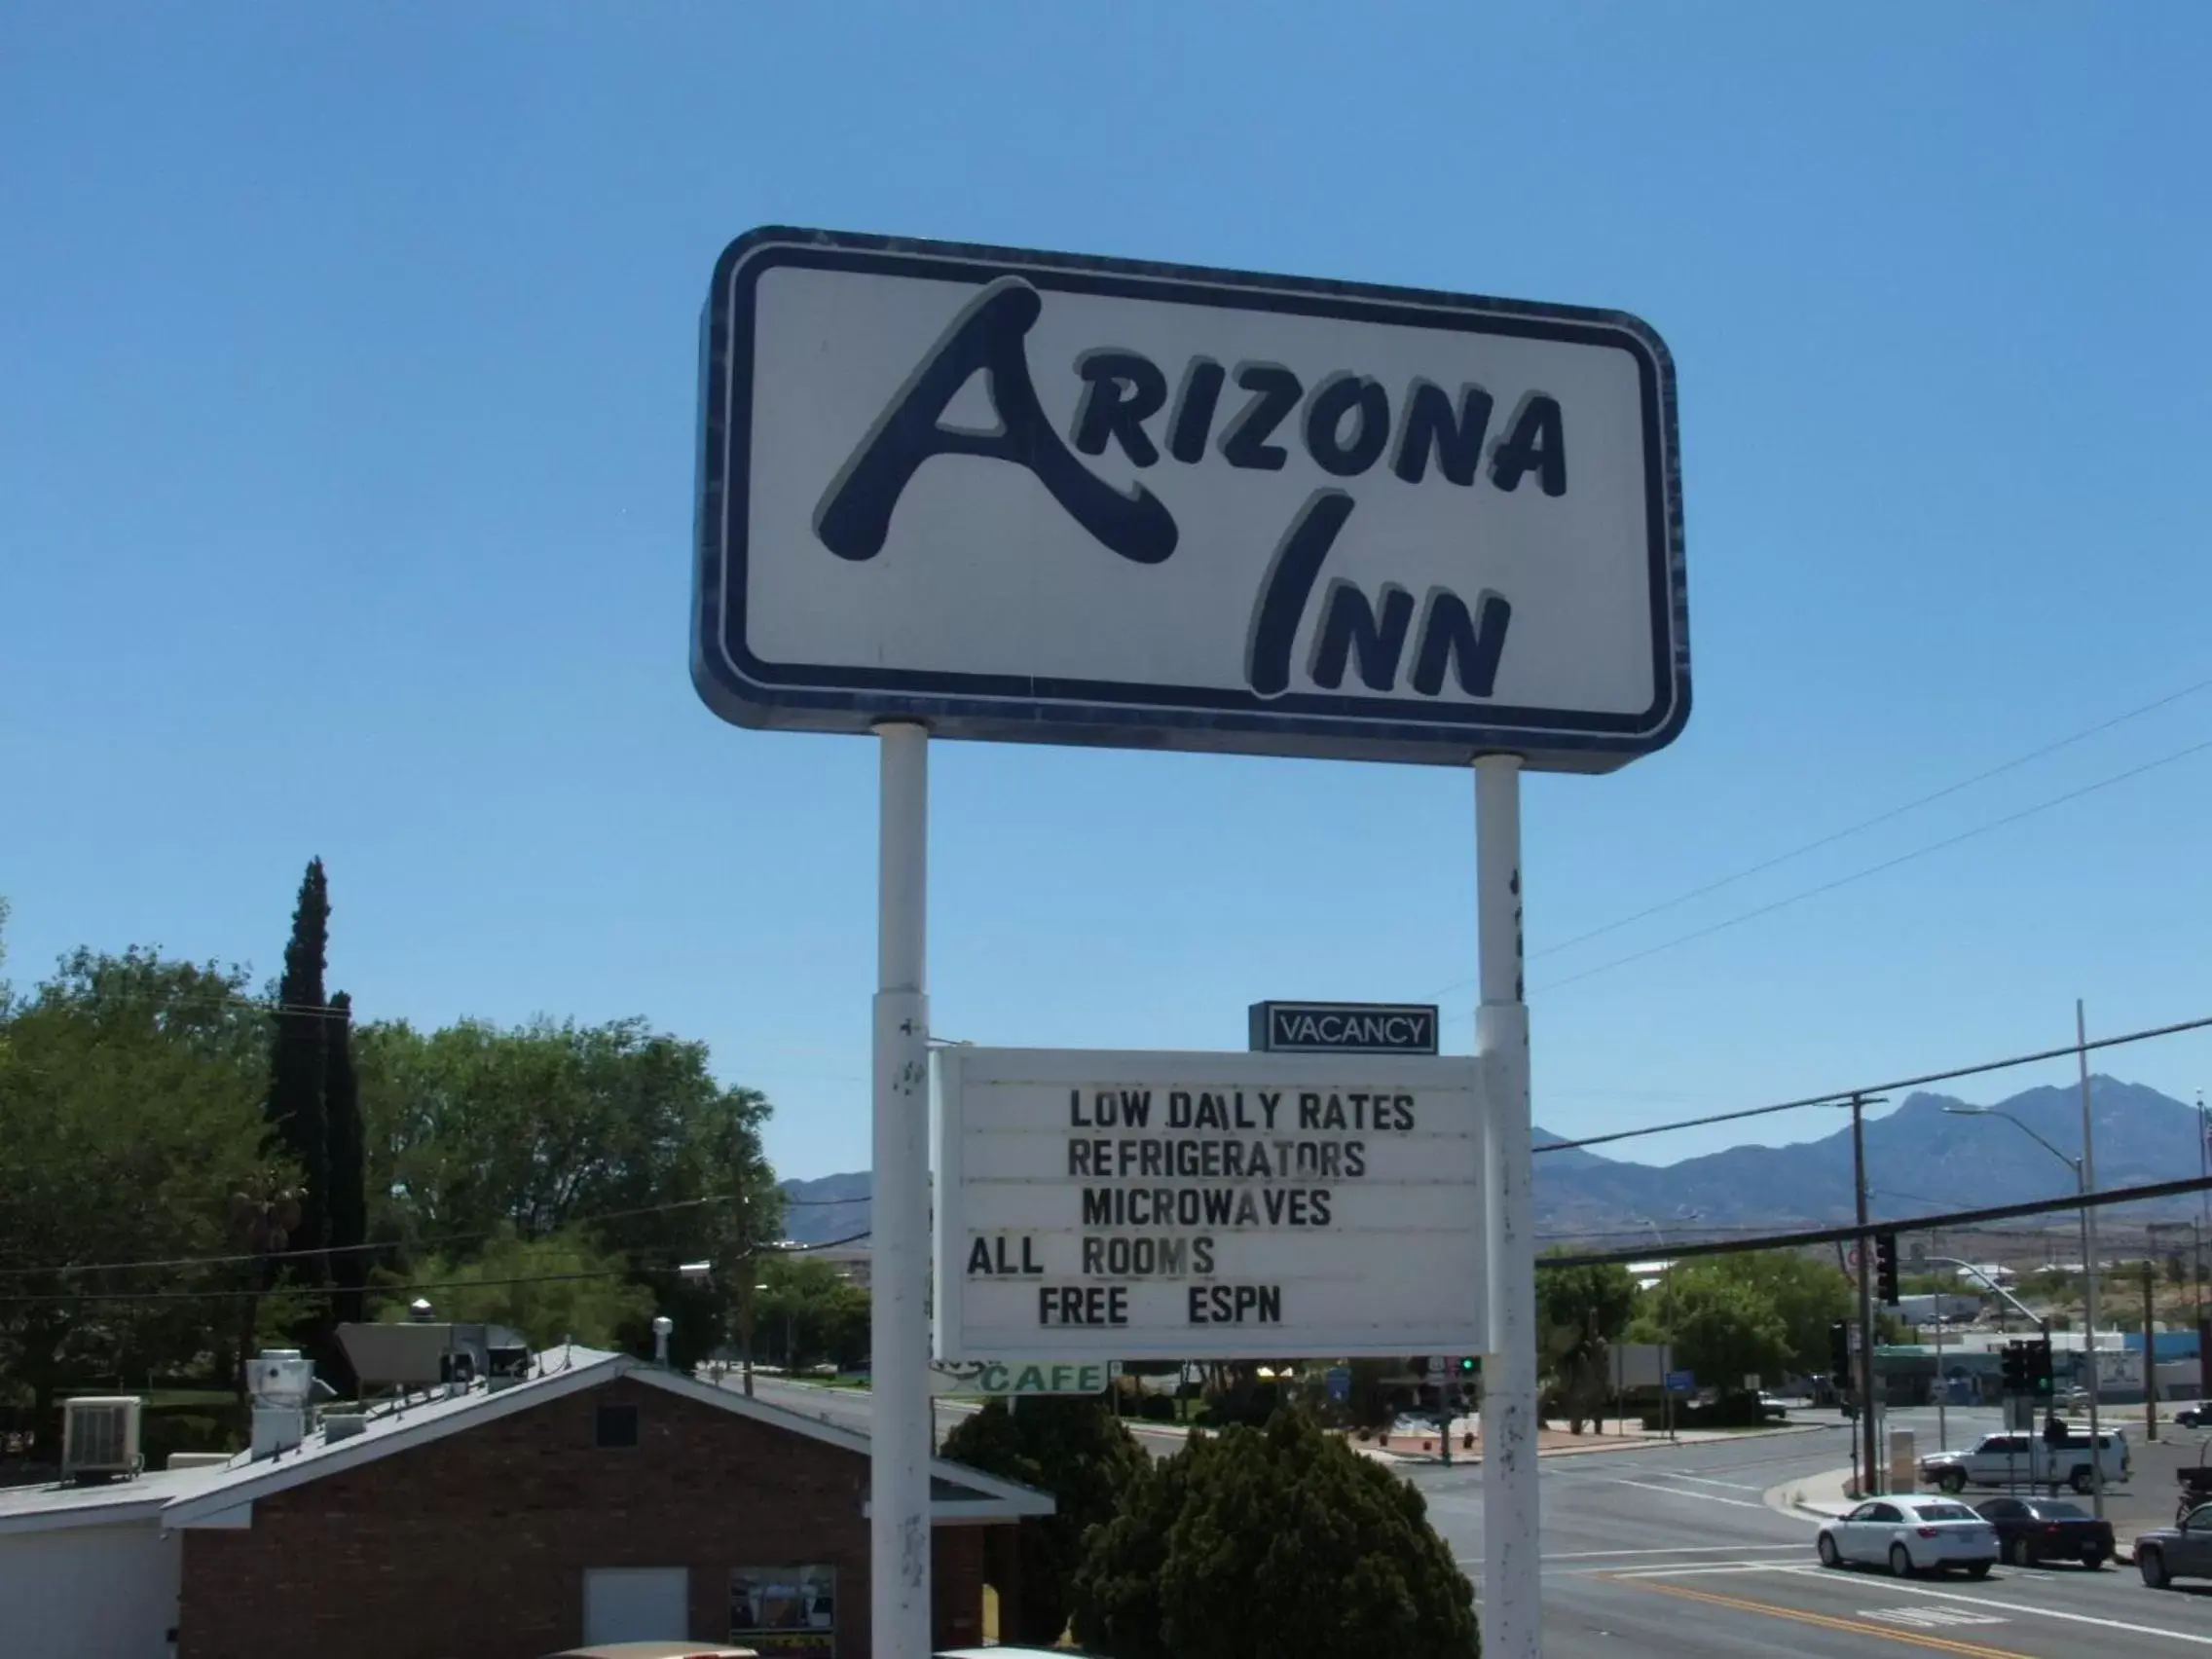 Property logo or sign, Property Logo/Sign in Arizona Inn